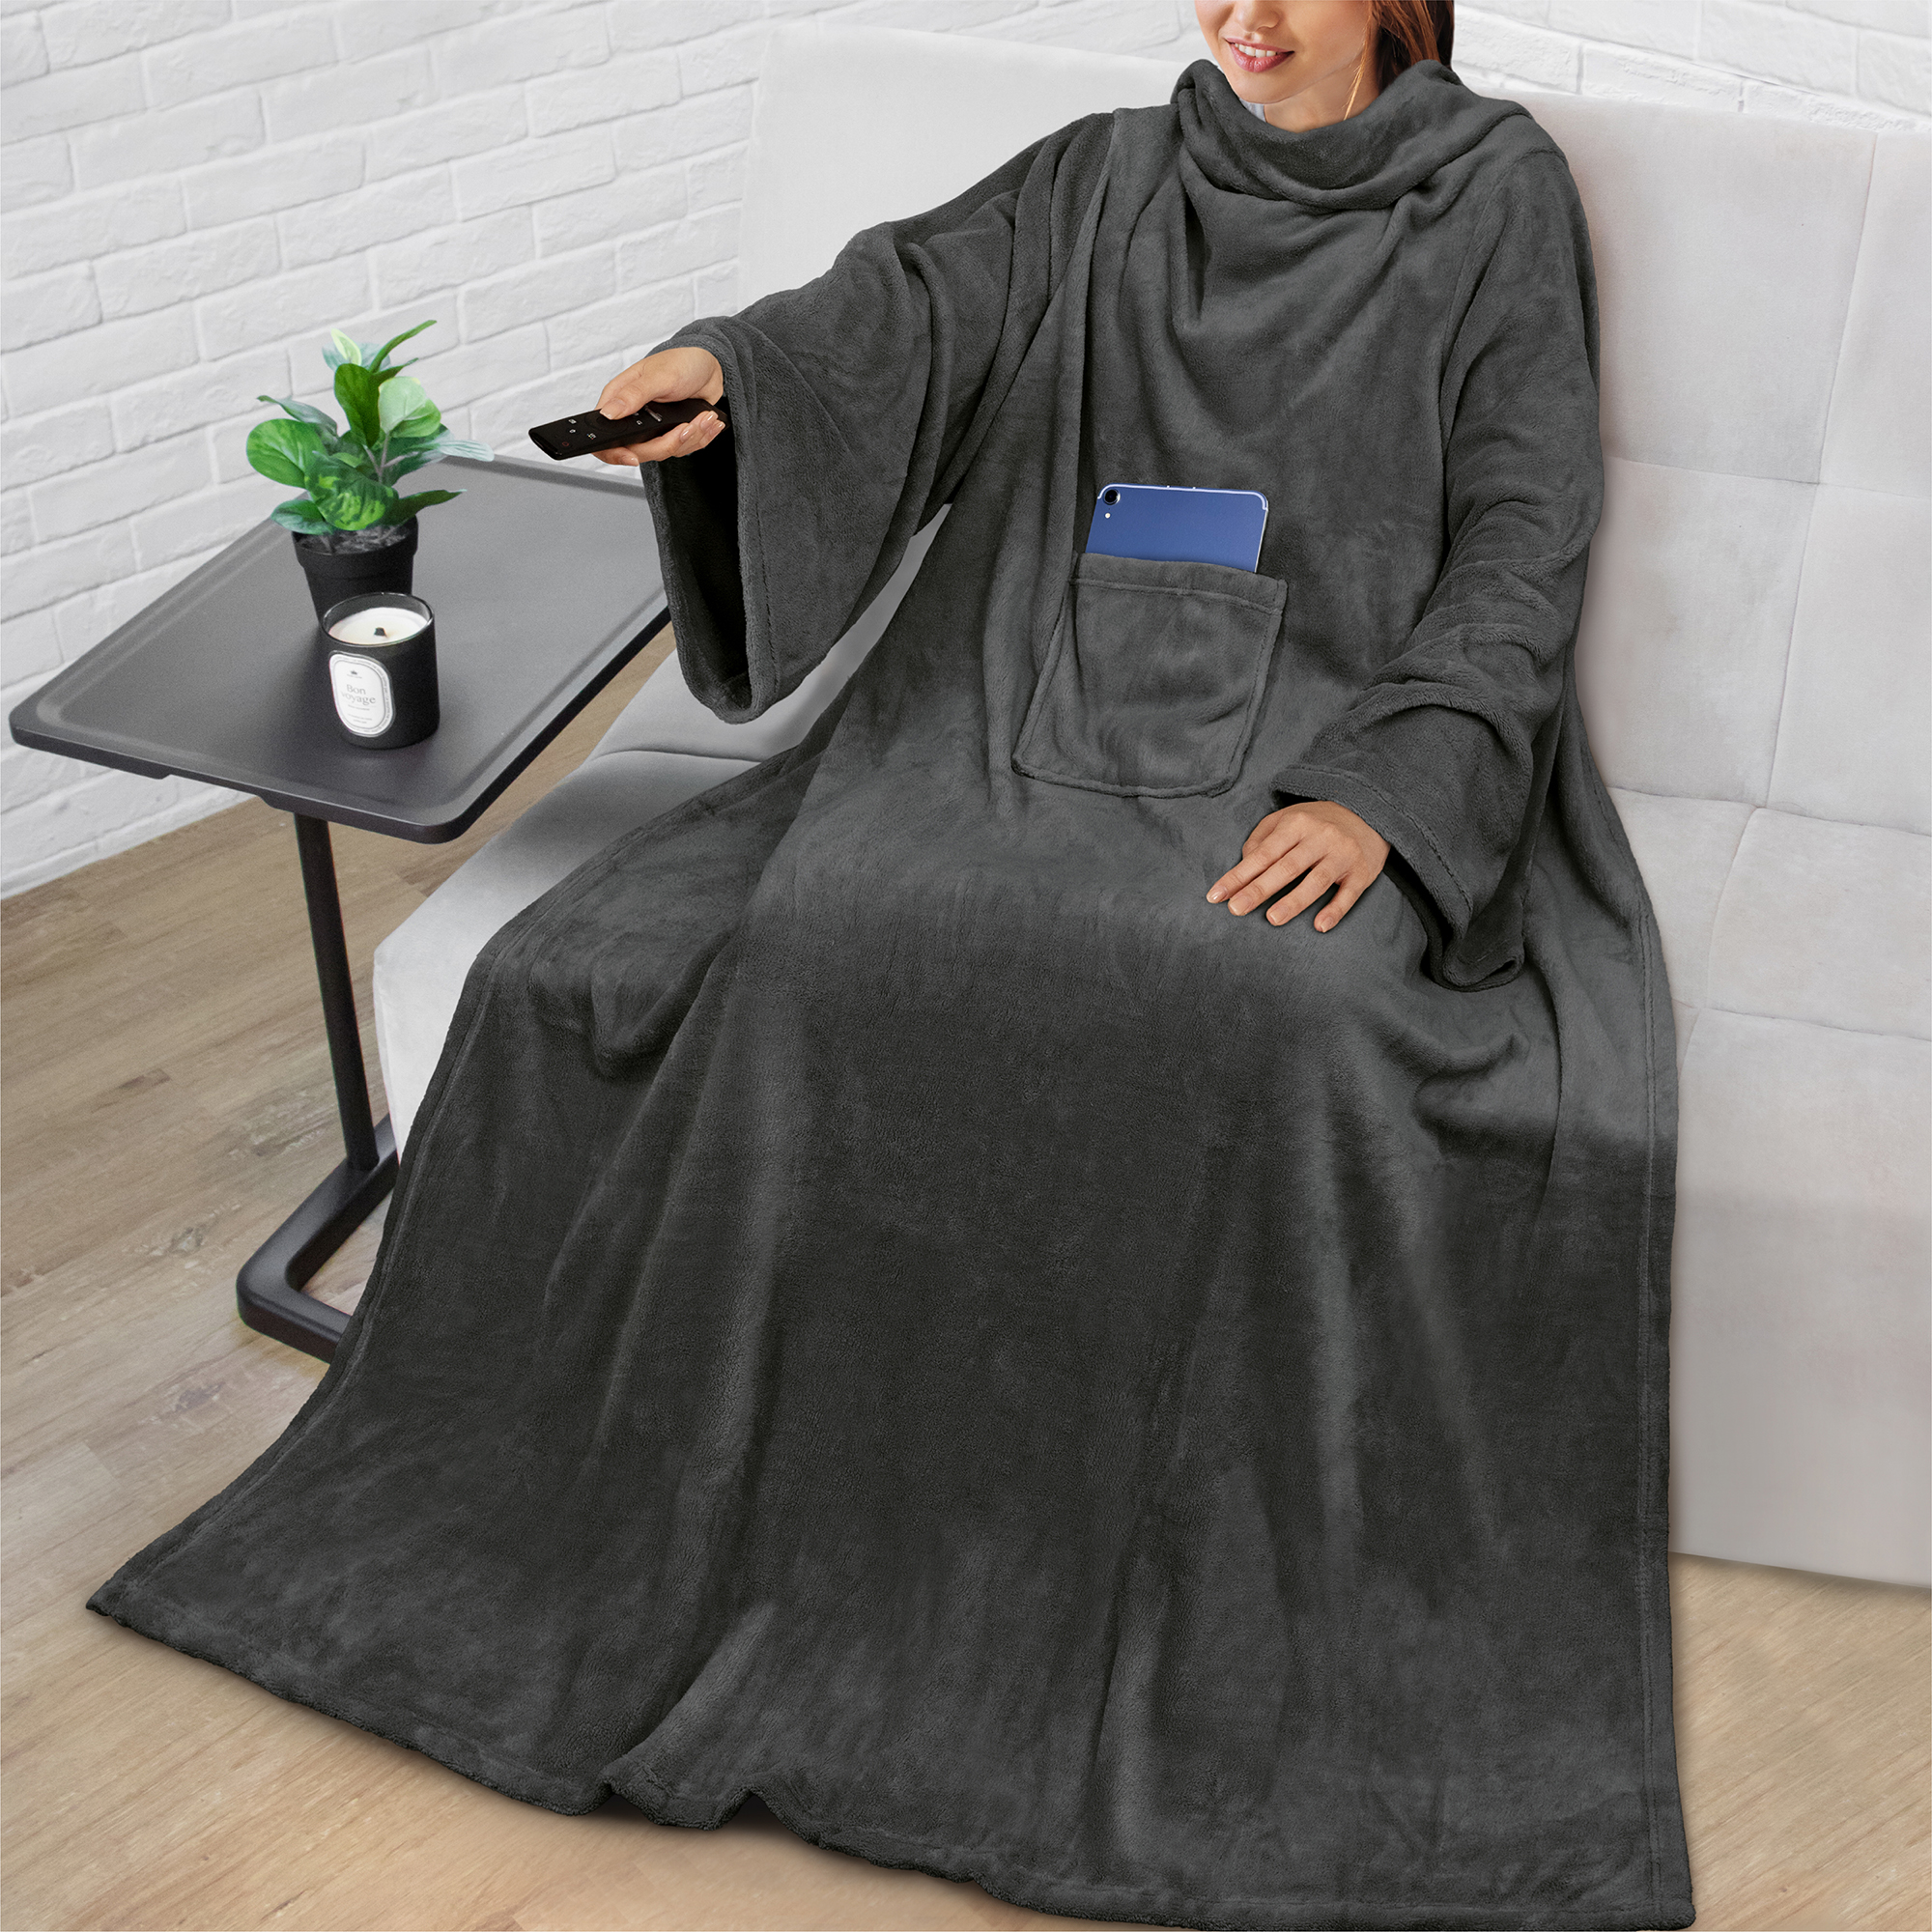 Snuggie Soft Warm Long Fleece TV snug Blanket light weight with Sleeves 